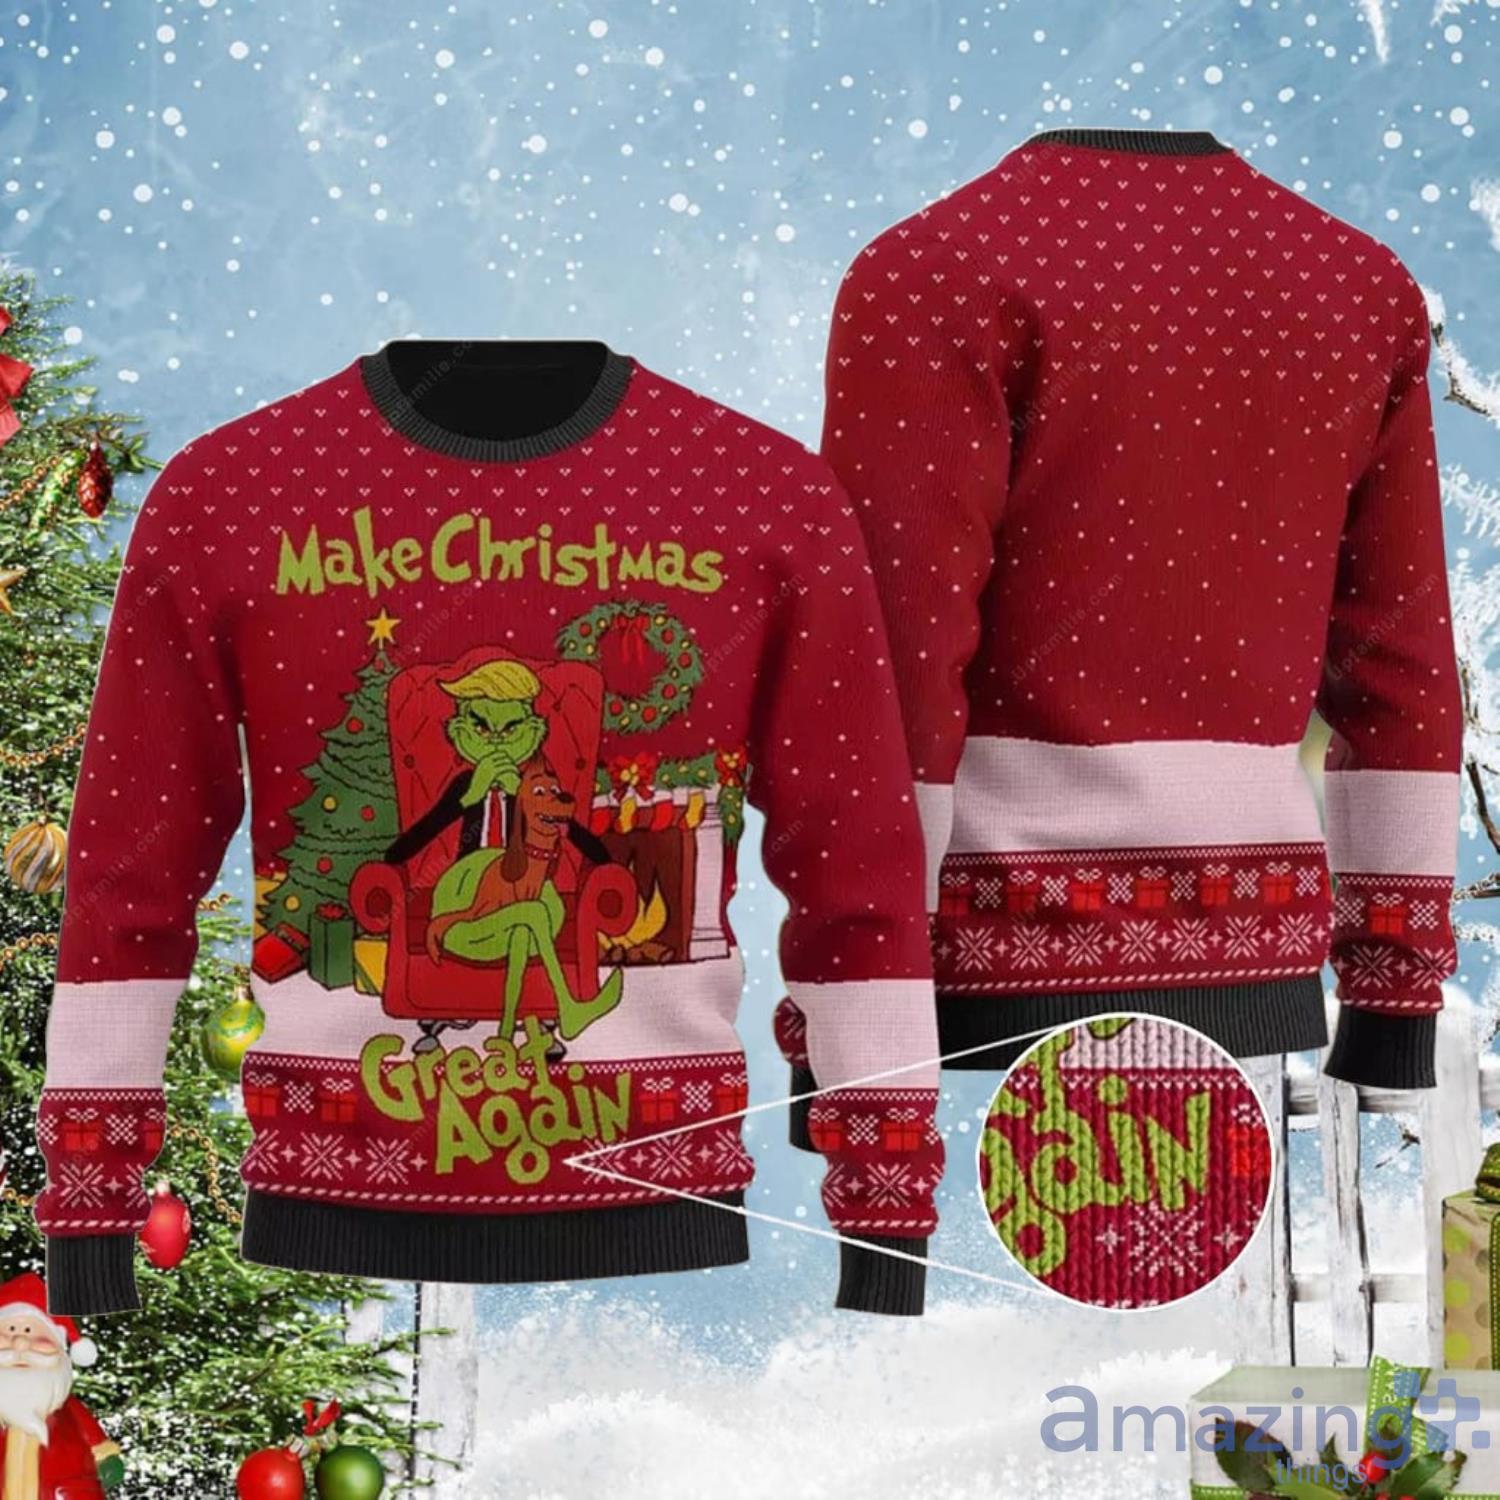 Make Christmas Great Again Sweater Trump Grinch Make Christmas Ugly Christmas Sweater Product Photo 1